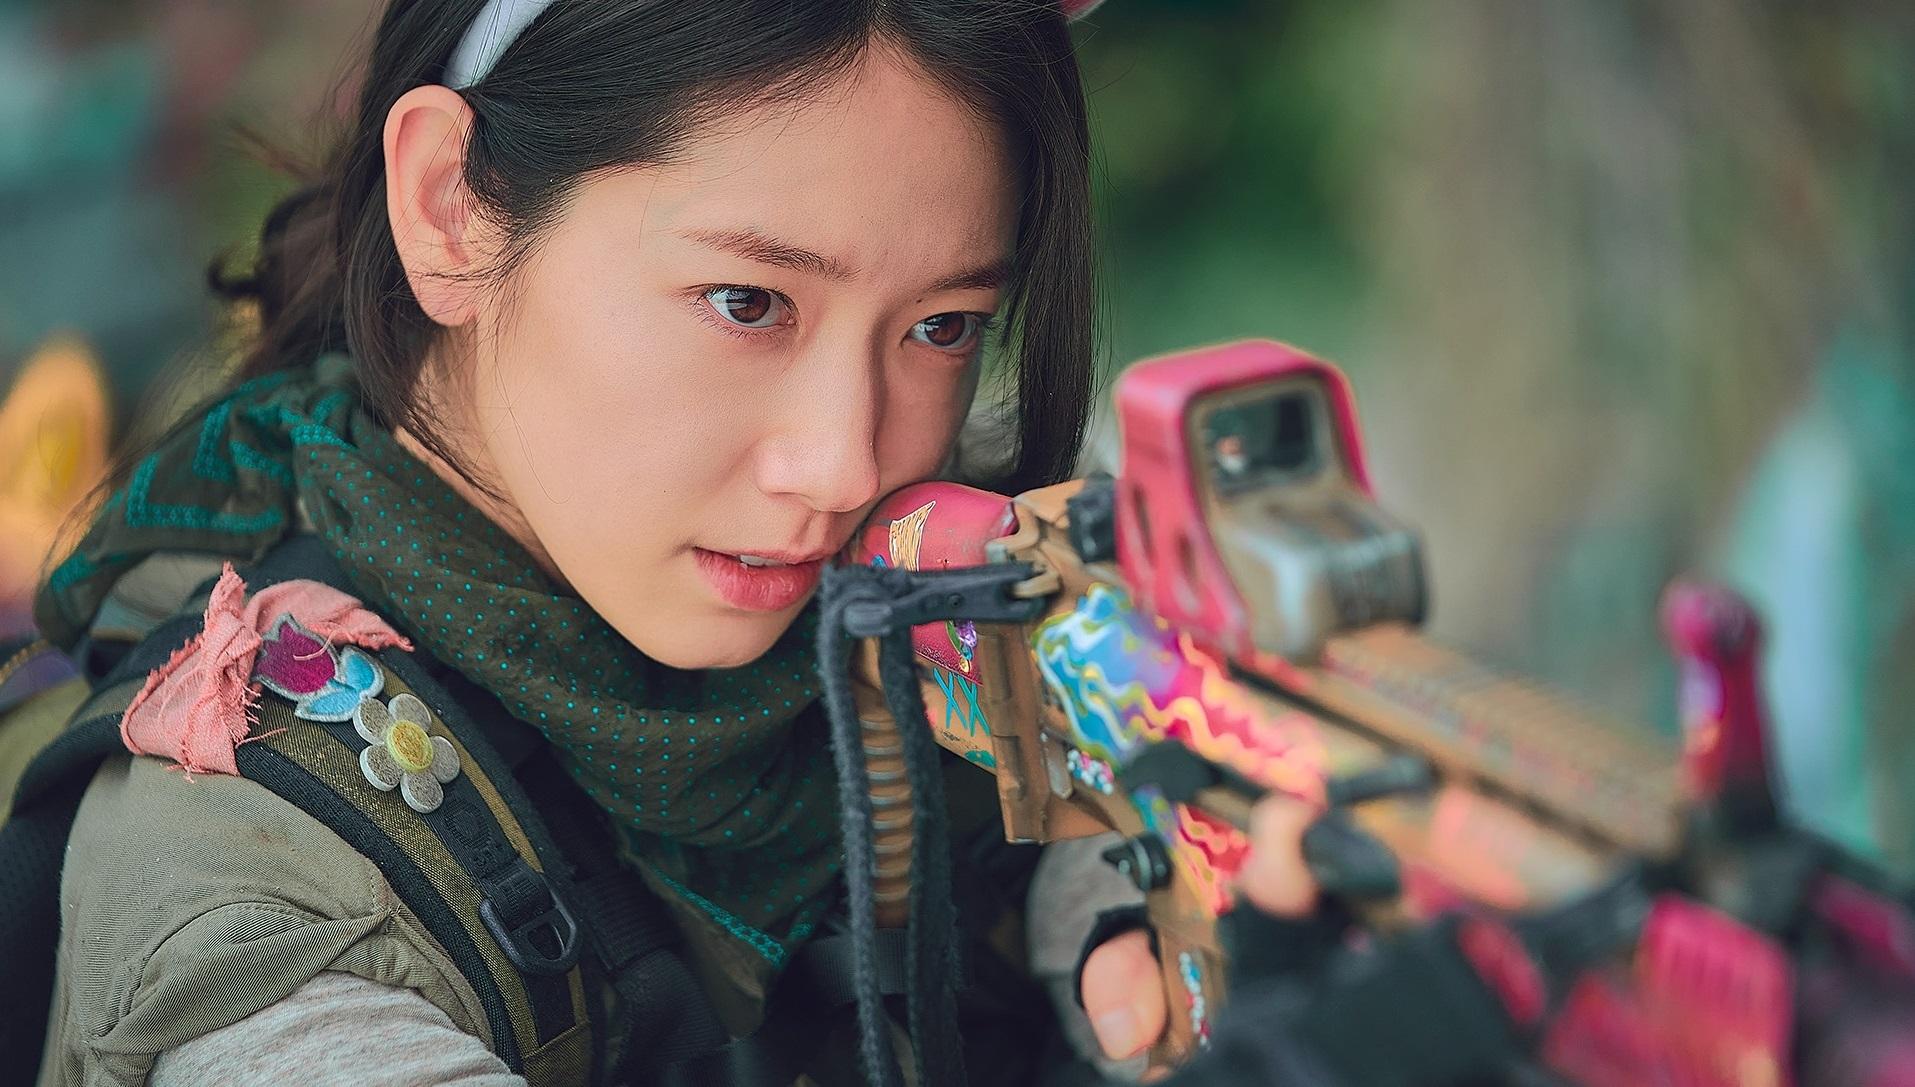 Park Shin Hye S New K Drama Sisyphus Is Dropping On Netflix On Feb 17 Gma News Online